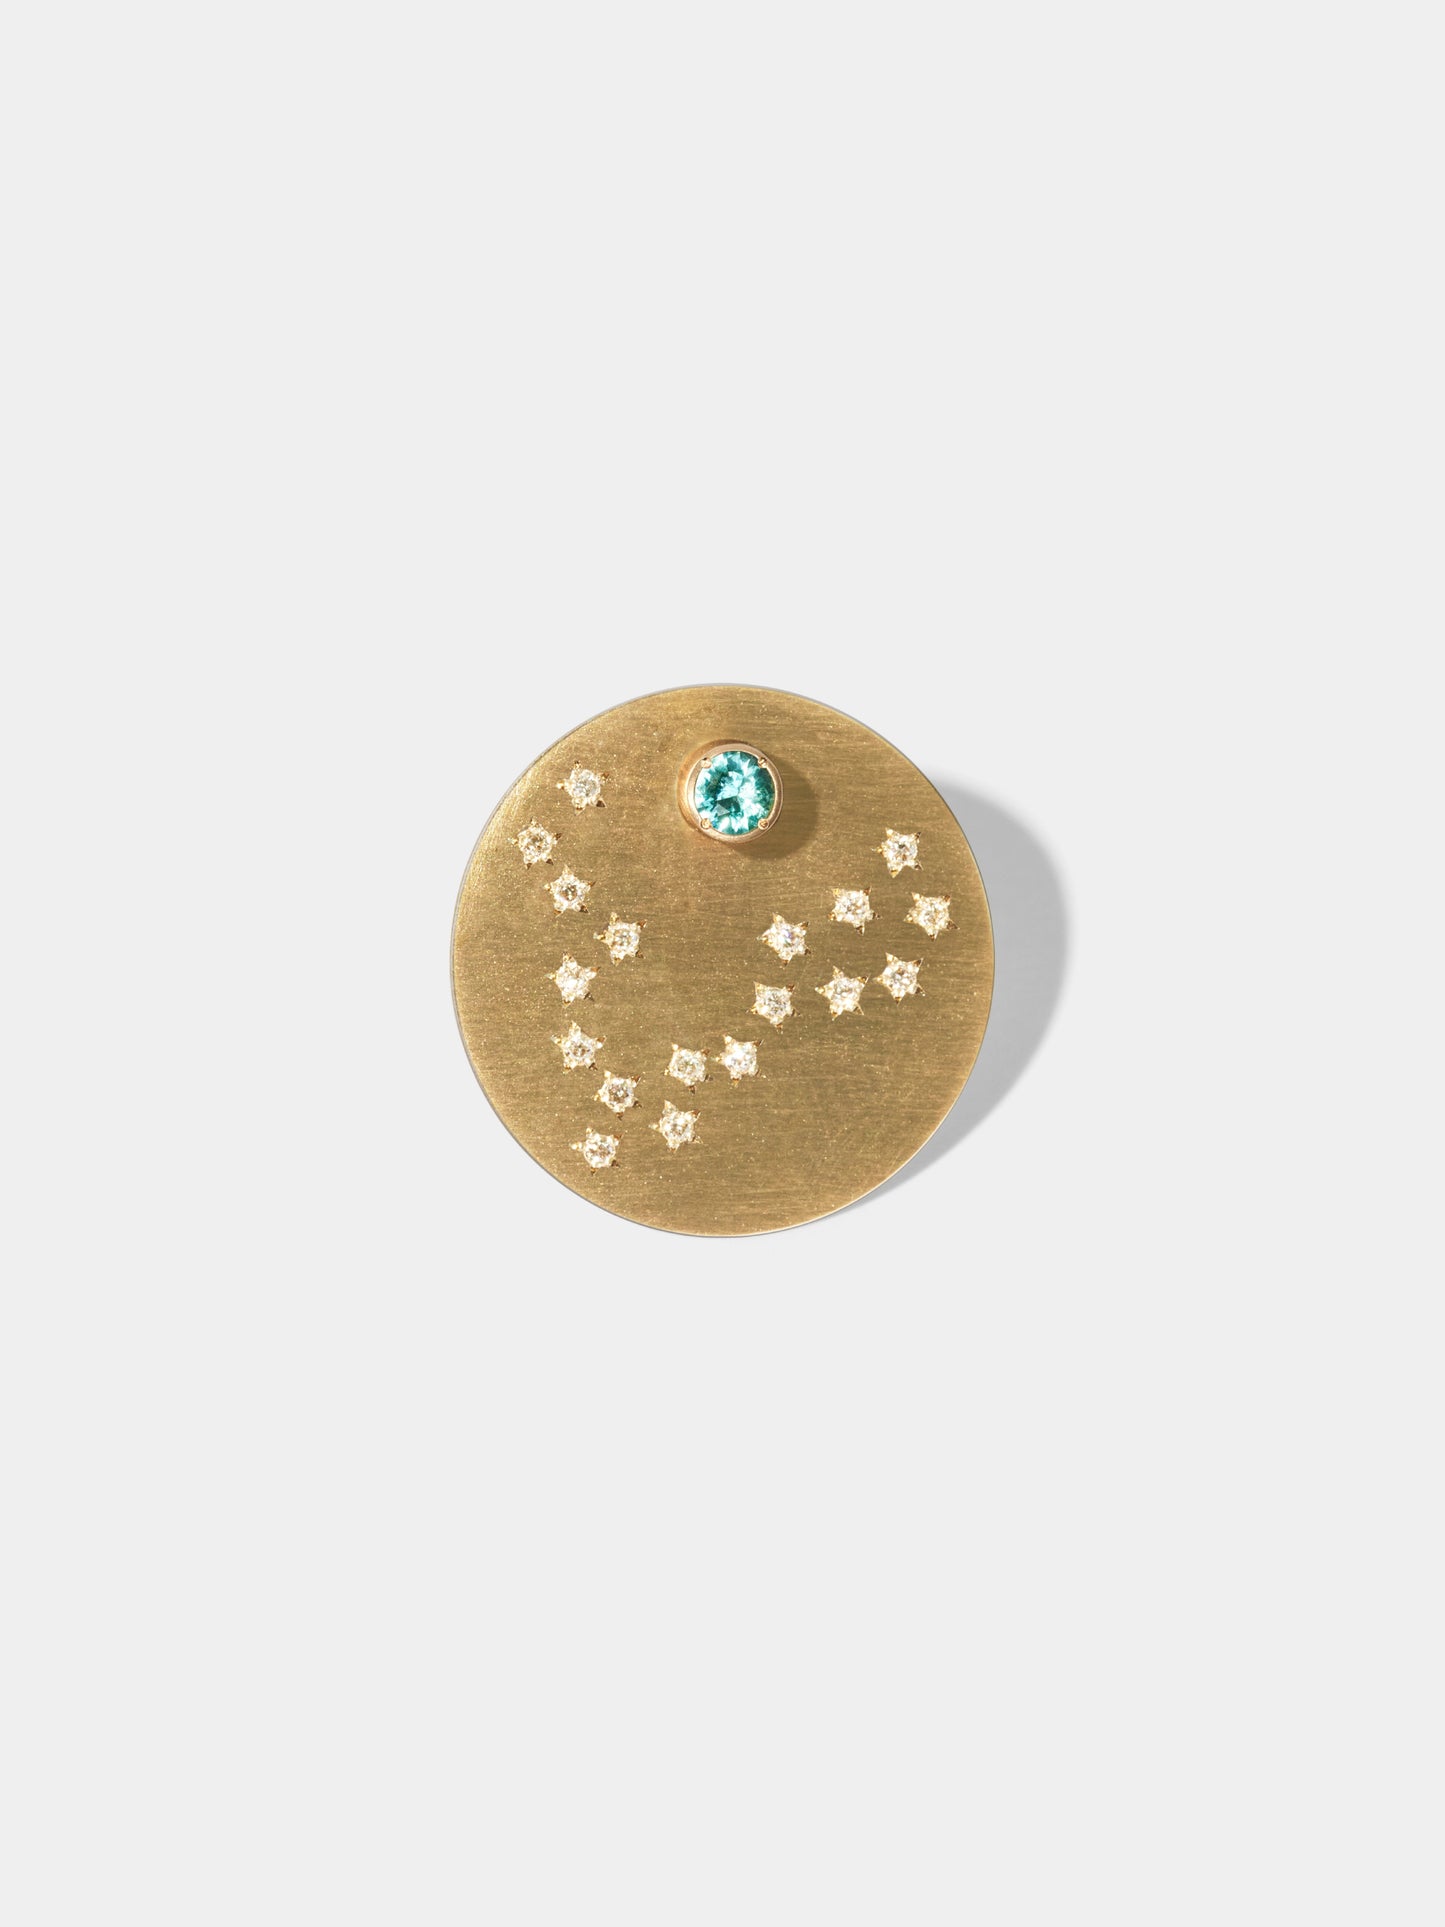 ASTERISM_Pierced Earring_Pisces(魚座) / Emerald